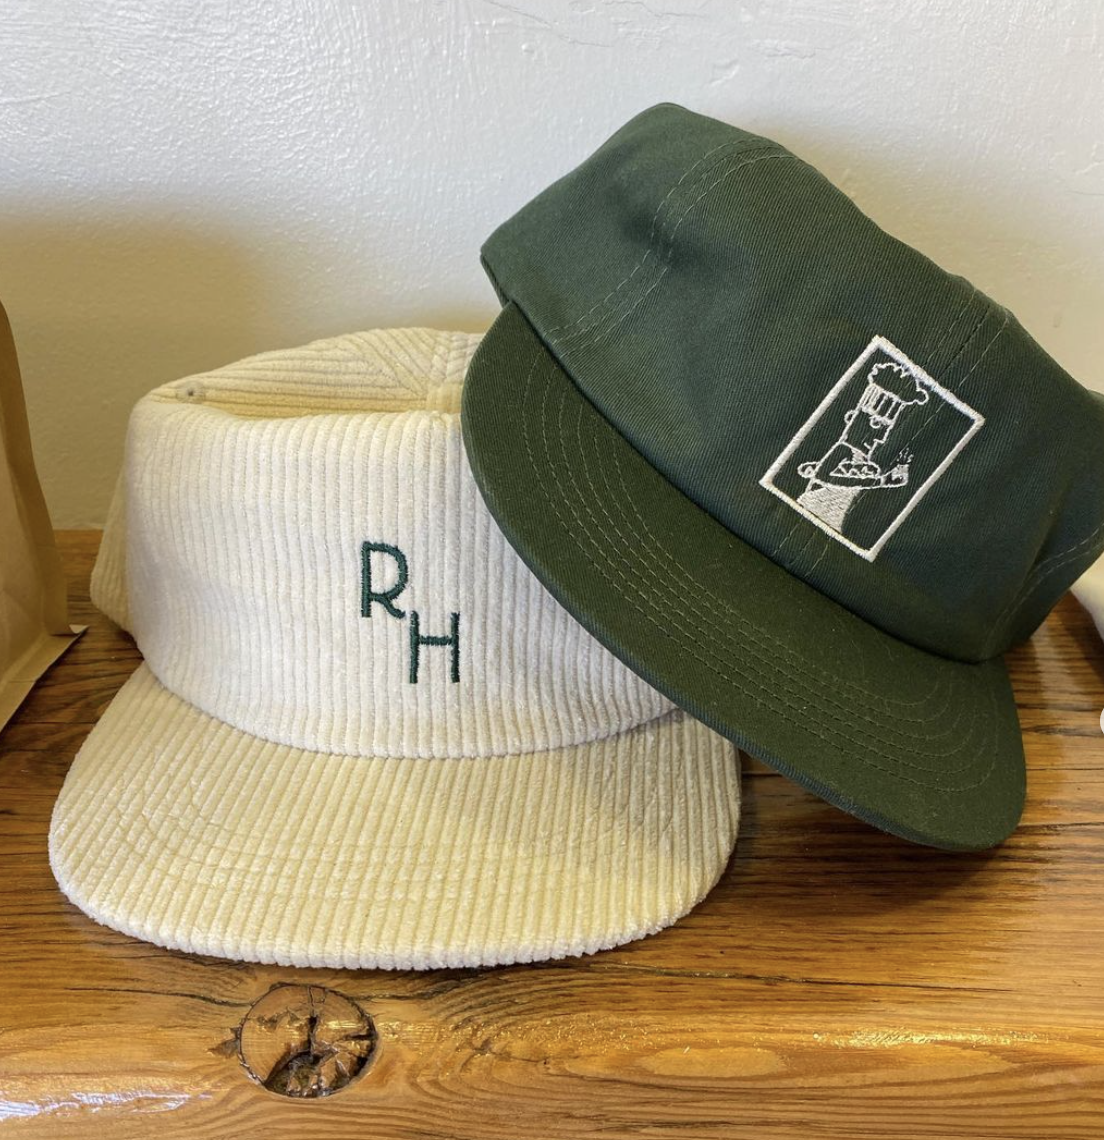 Rose Hill Purveyors hats